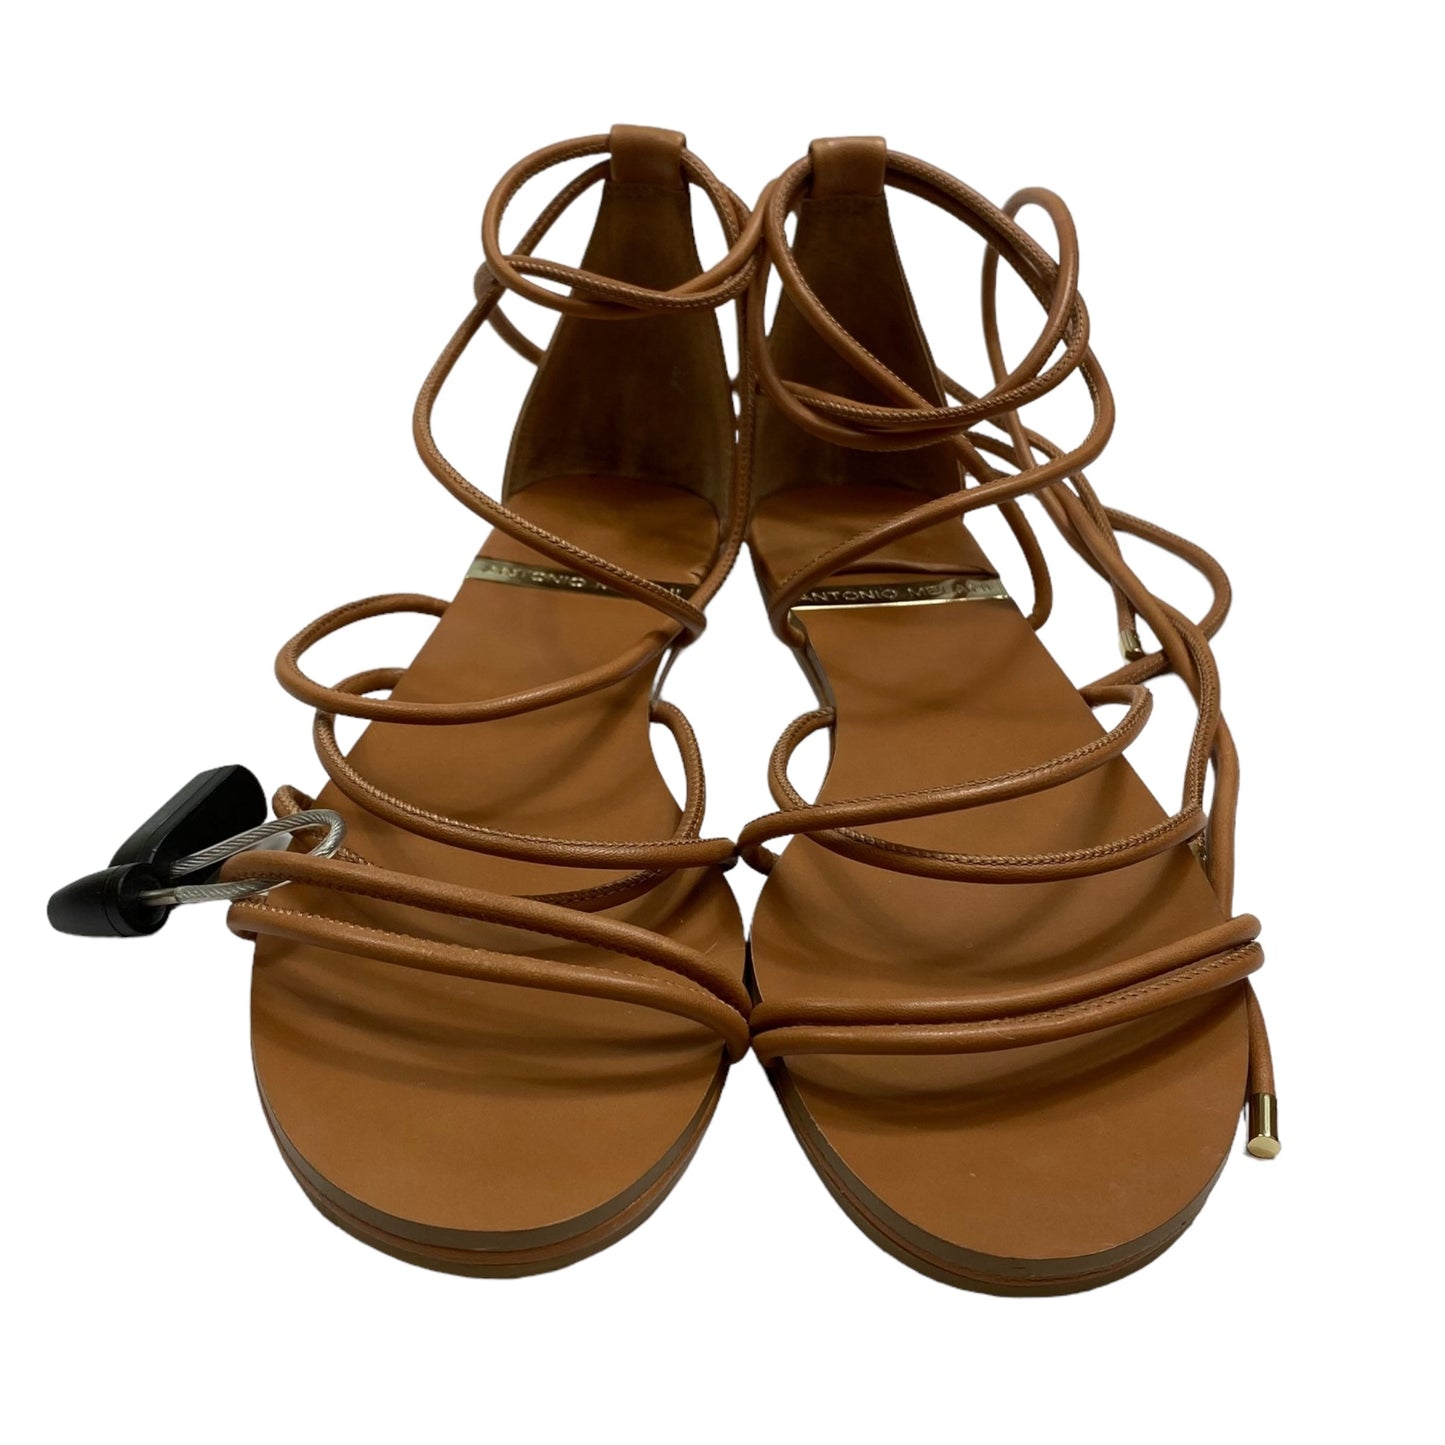 Sandals Flats By Antonio Melani  Size: 8